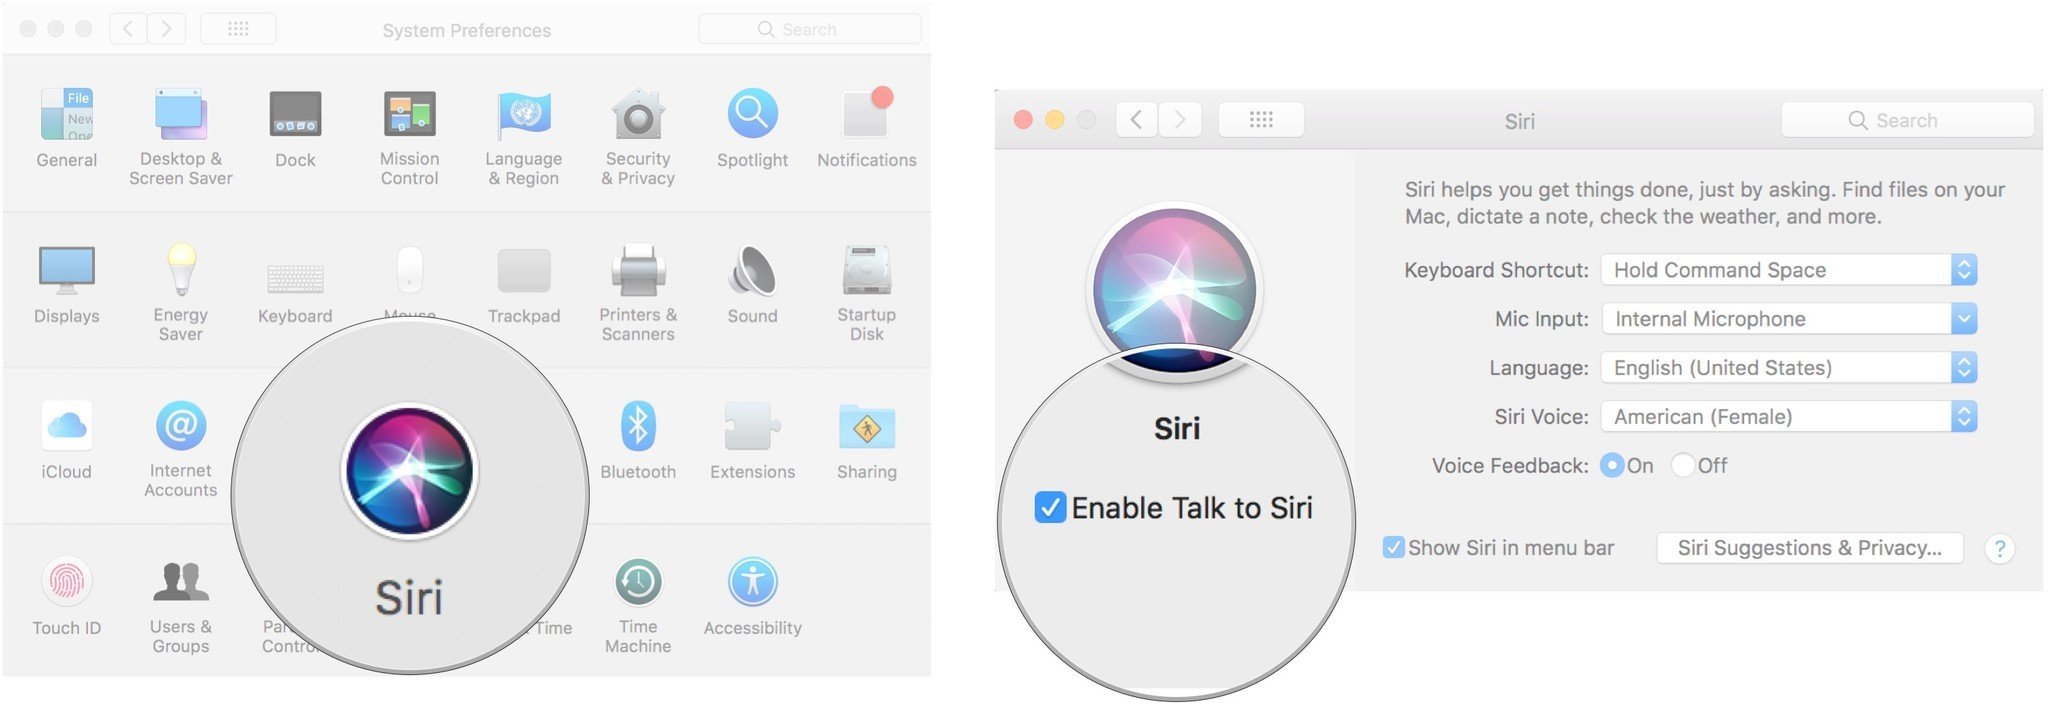 Click on Siri, then enable Talk to Siri